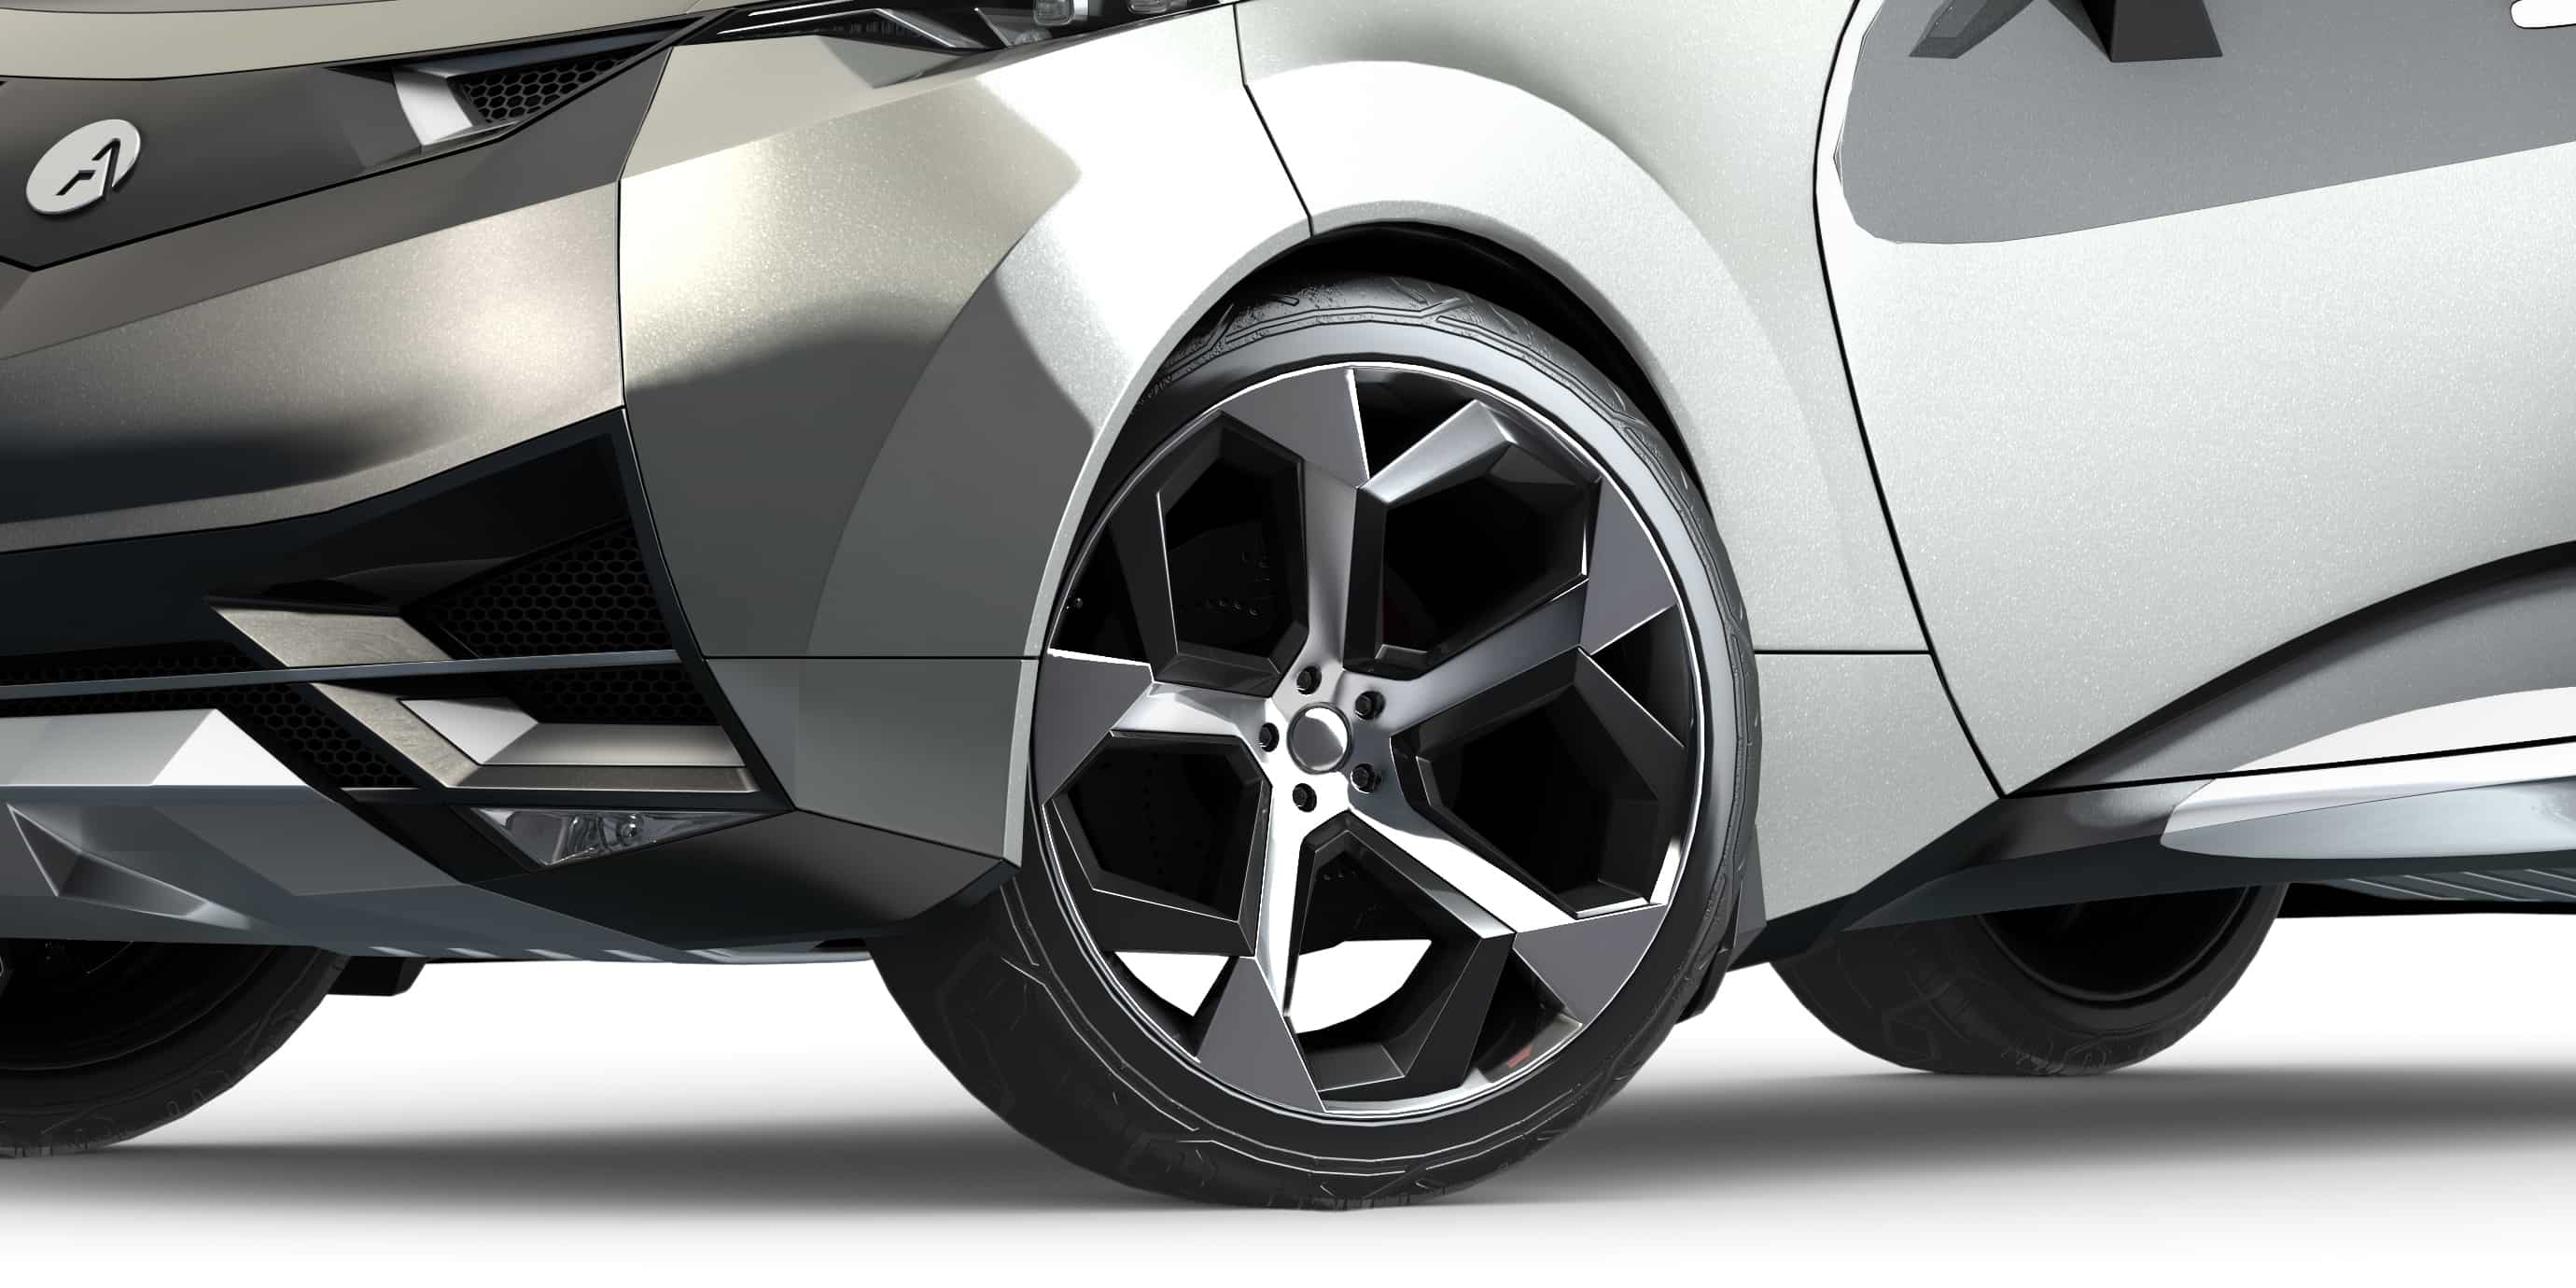 Closeup shot of tire on a silver futuristic vehicle